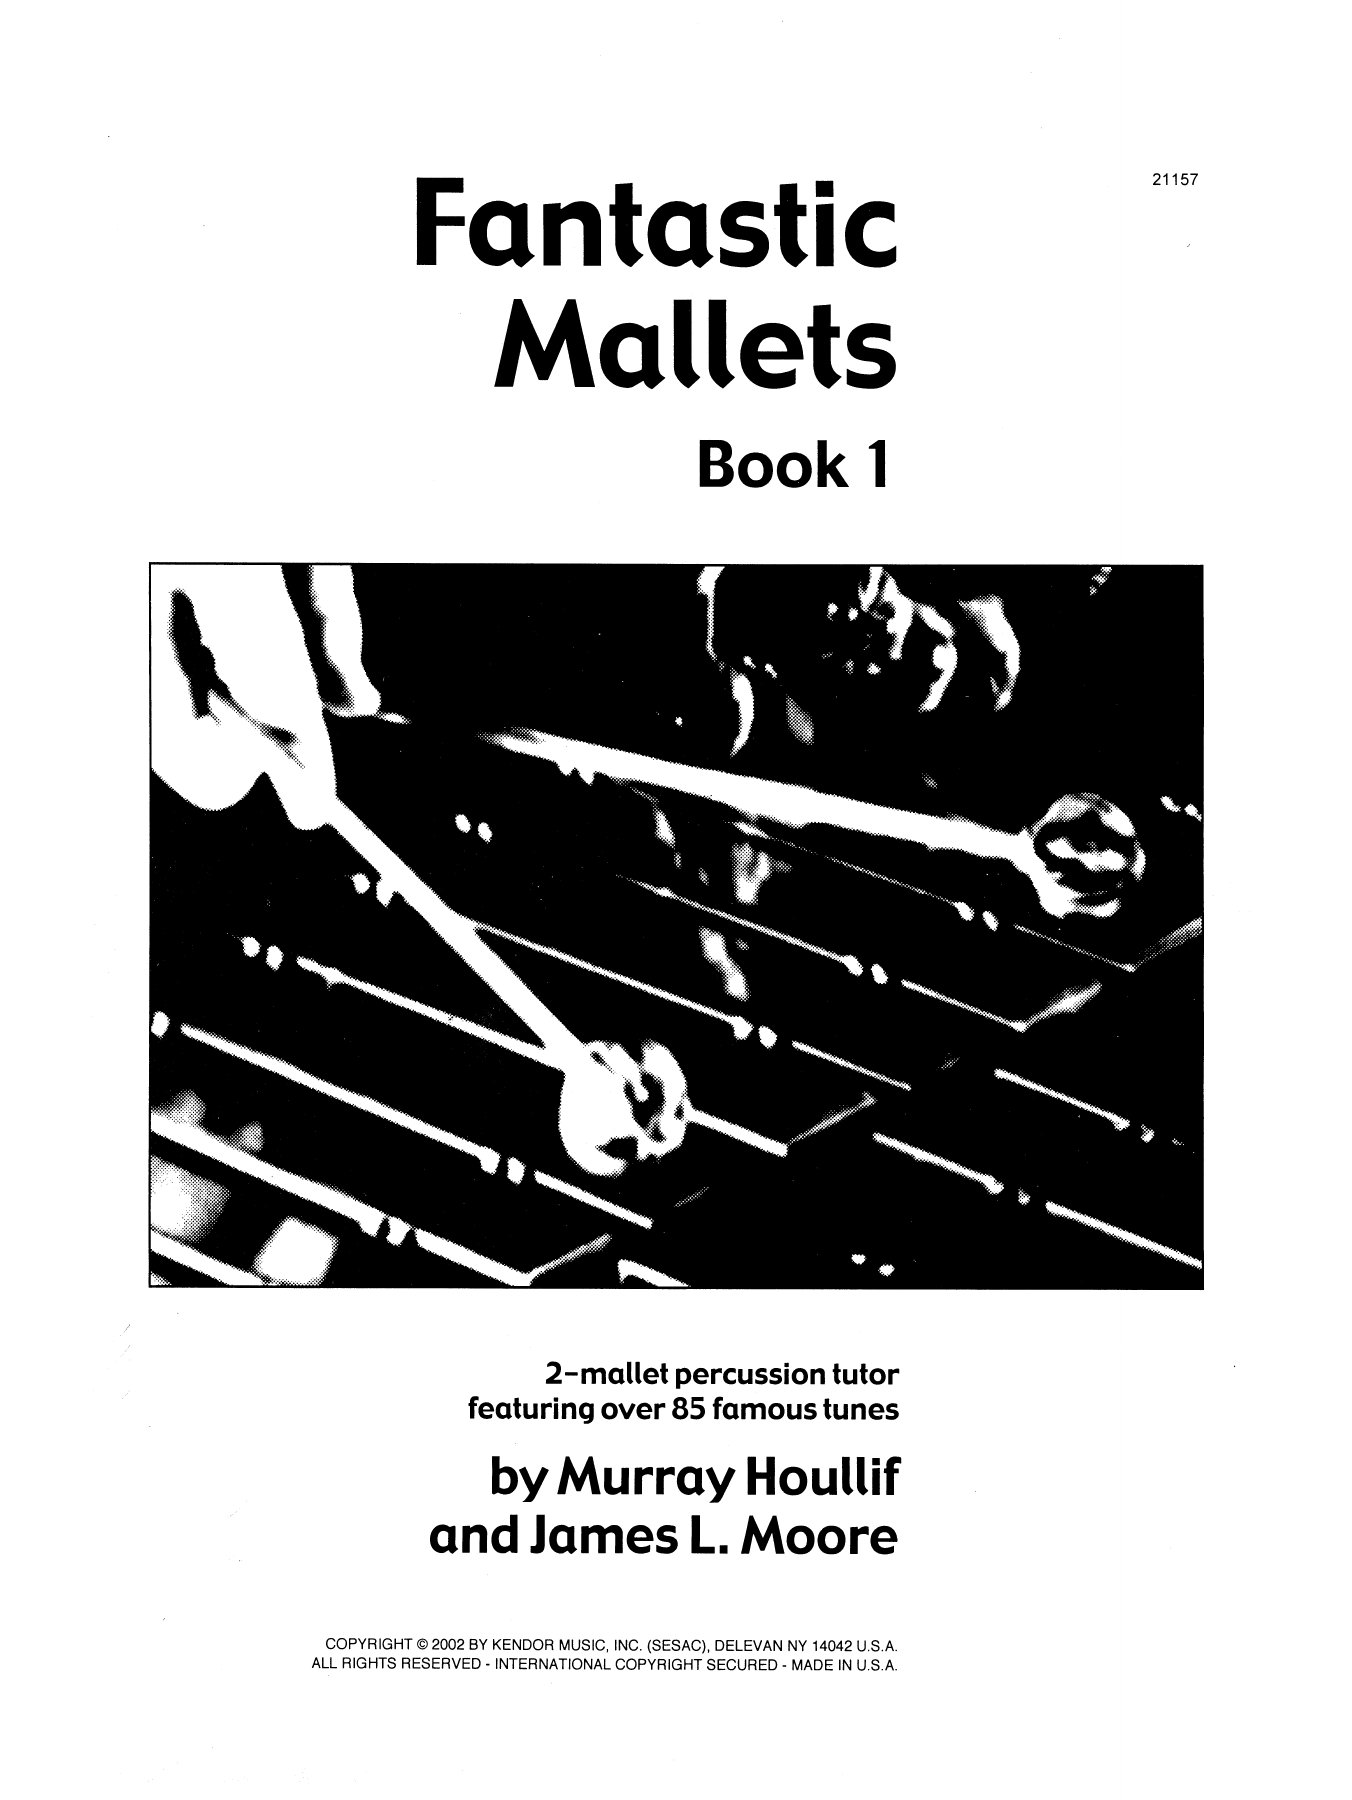 Download Murray Houllif & James Moore Fantastic Mallets, Book 1 Sheet Music